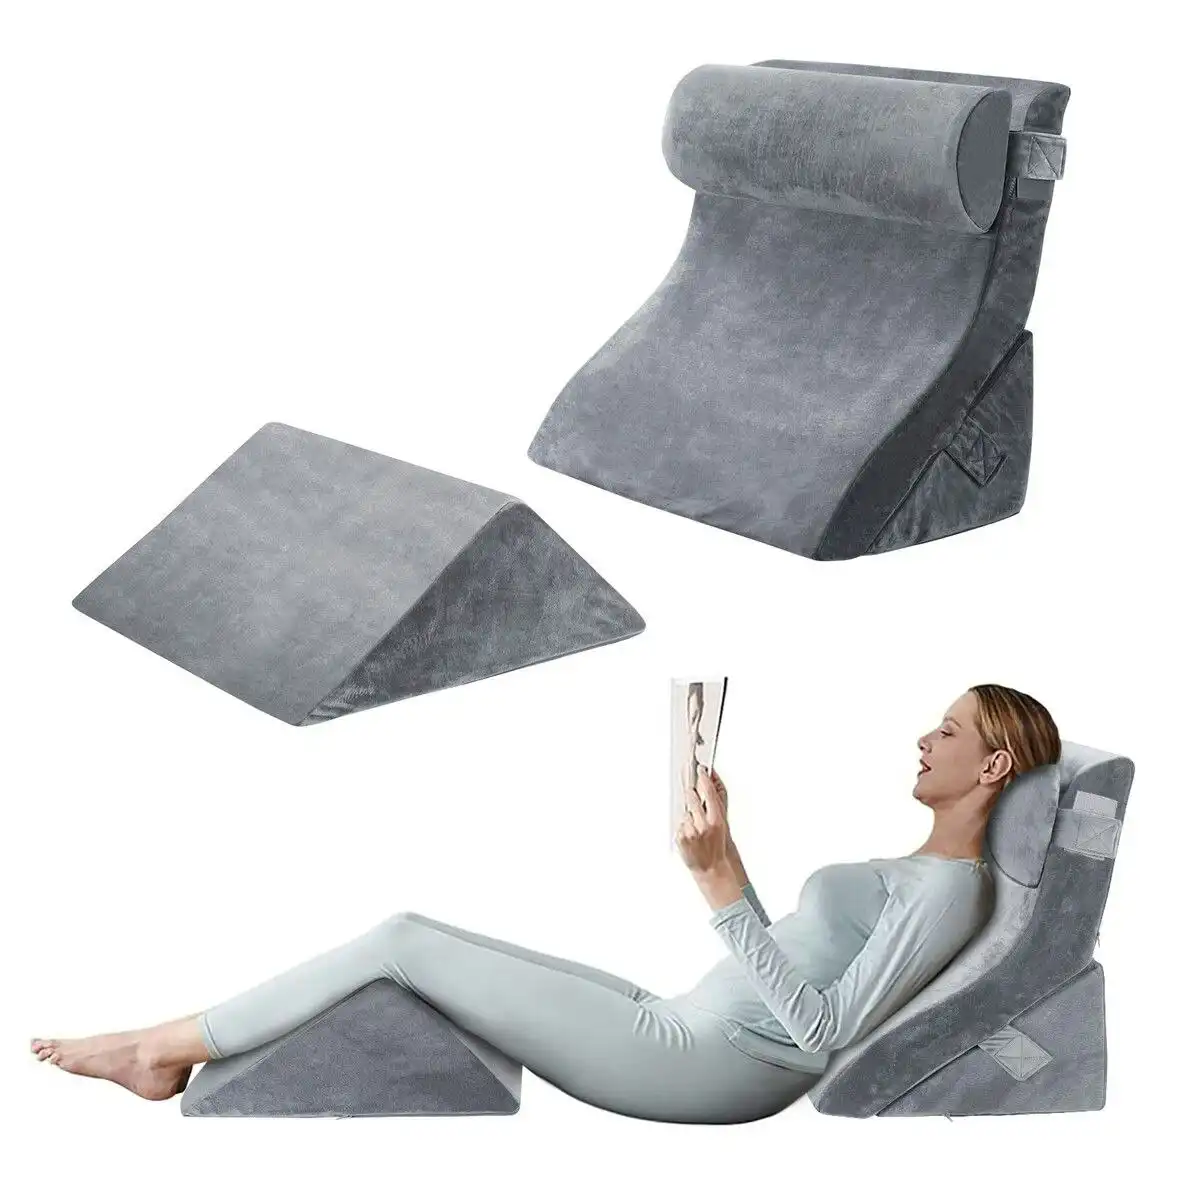 Luxdream 4 Pcs Bed Wedge Pillow Set Neck Back Head Leg Support Velvet Fabric Adjustable Triangular Cushion Memory Foam